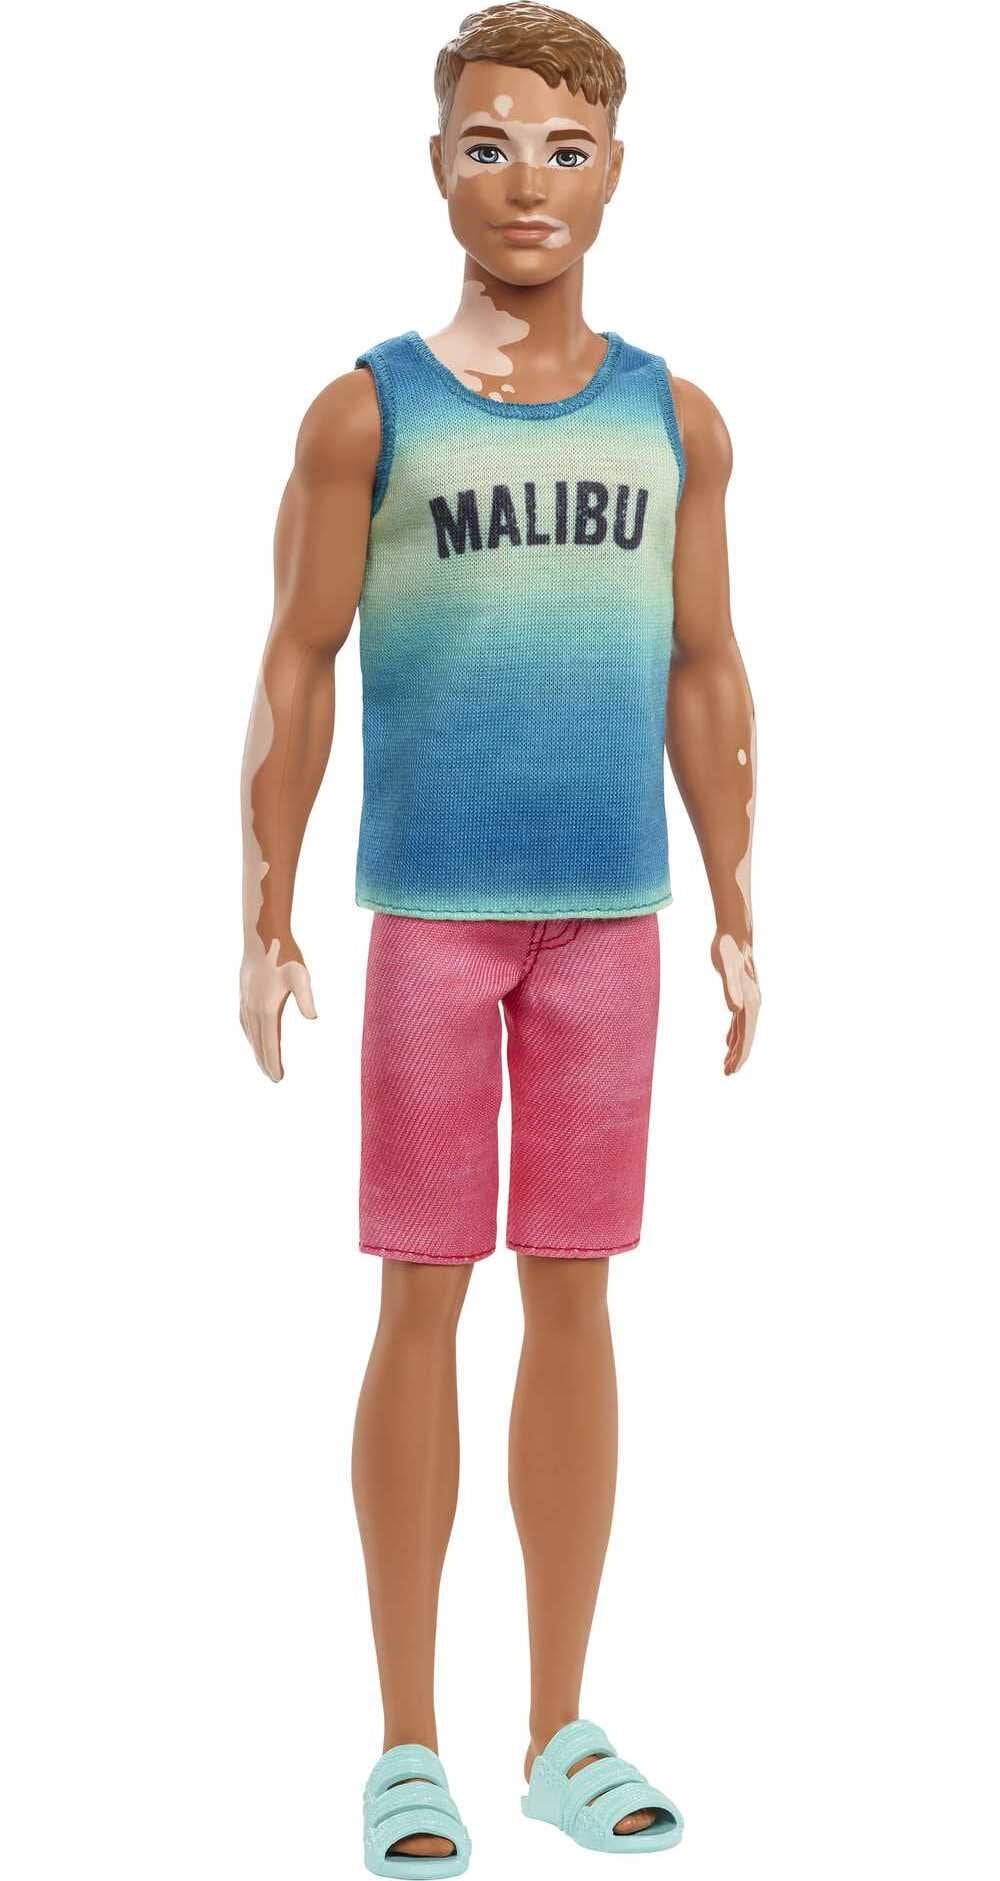 Barbie Fashionistas Ken Fashion Doll in Malibu Tank & with Vitiligo & Brunette Hair - Walmart.com